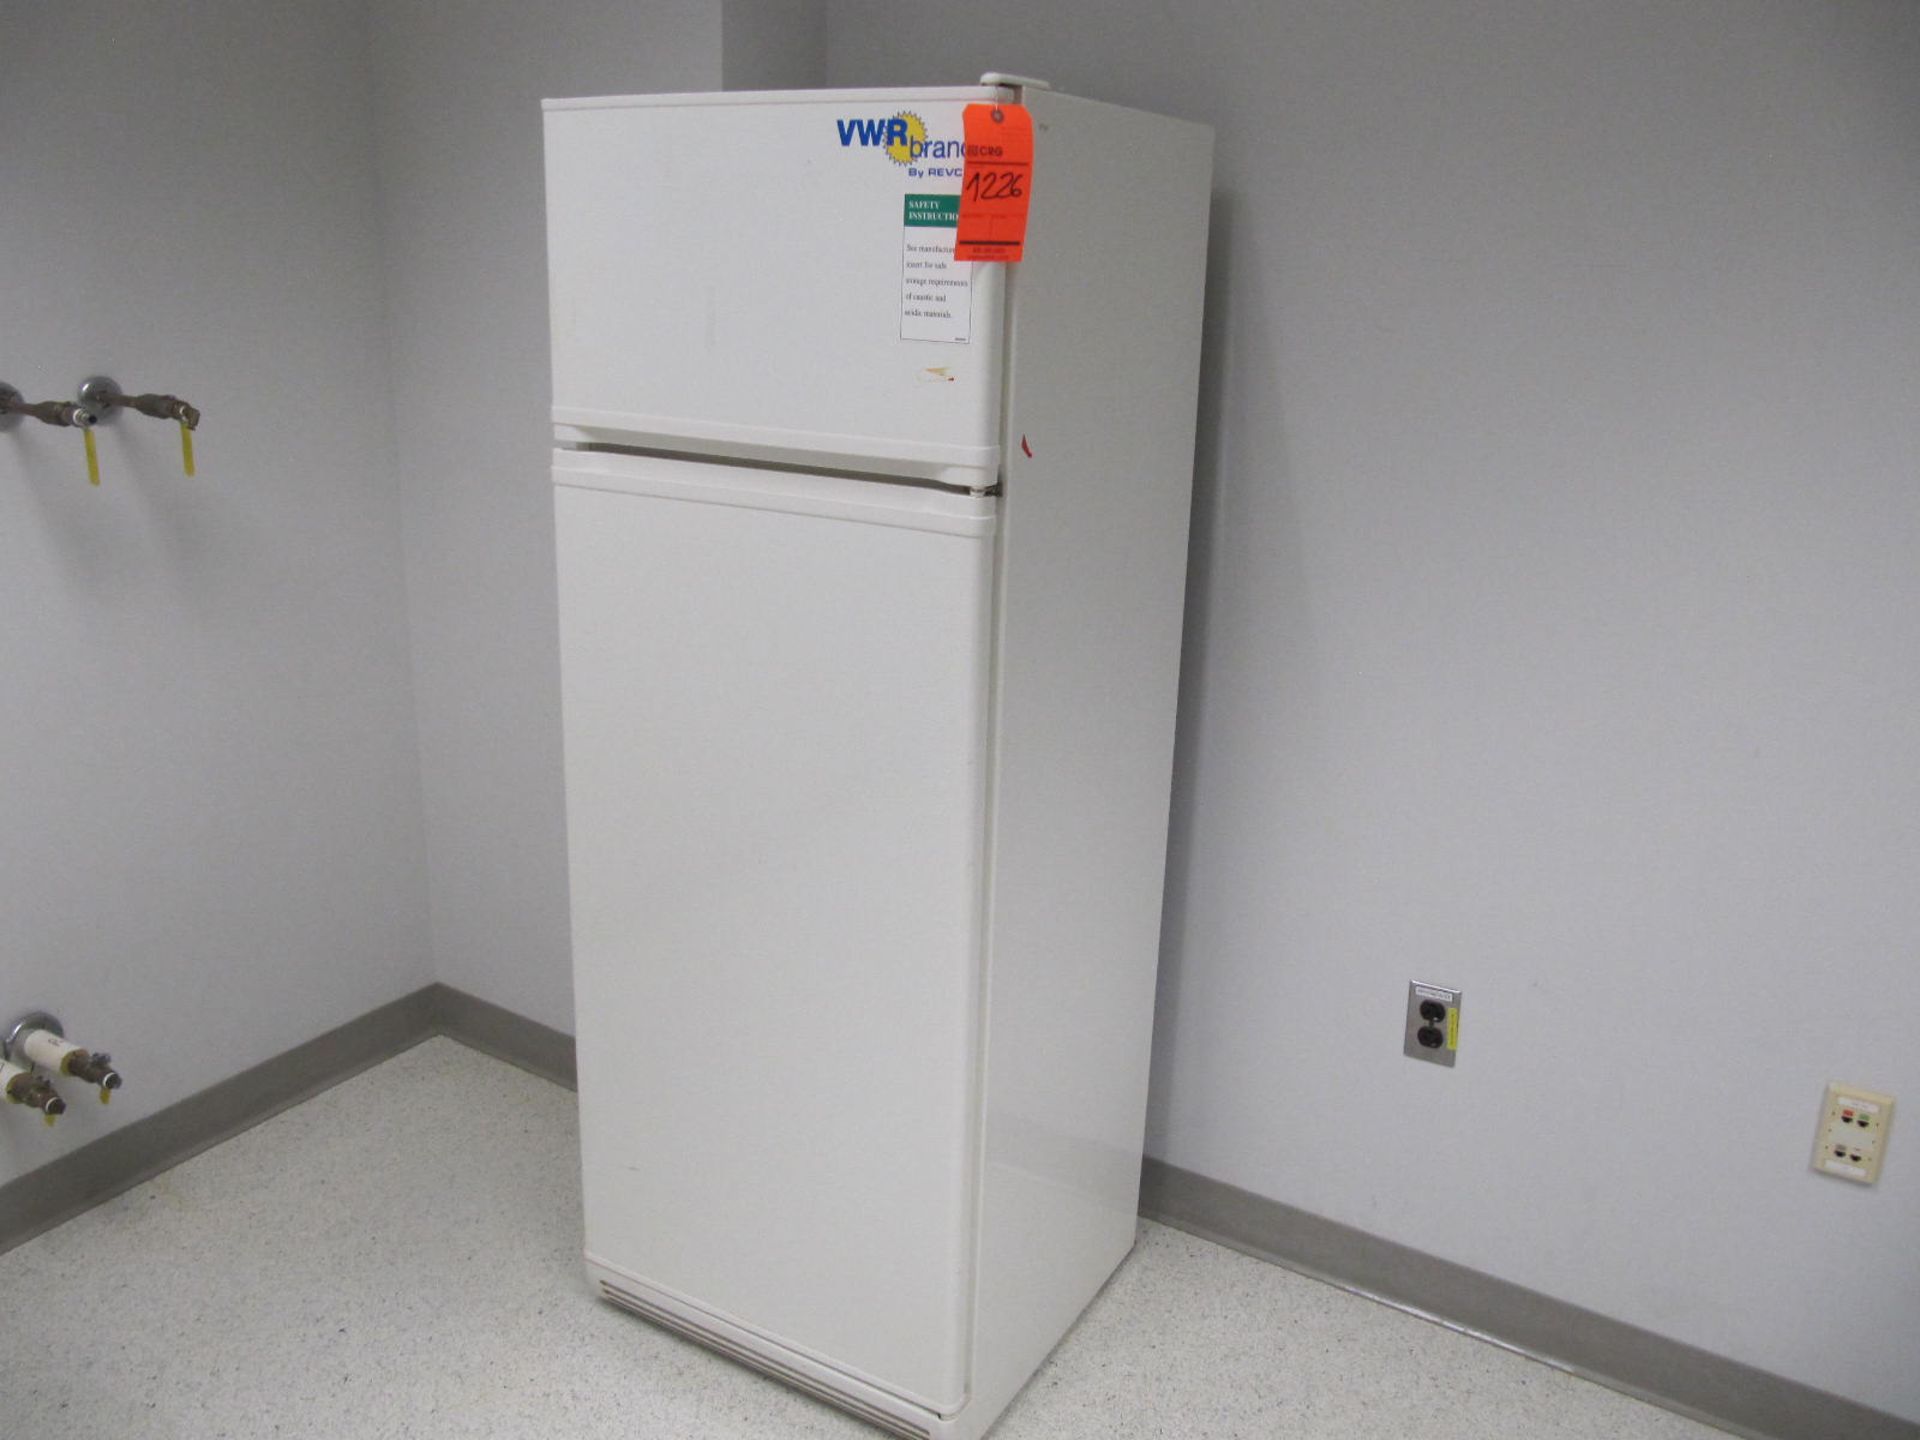 VWR refrigerator/freezer, located in building 5, 4th floor, room F414